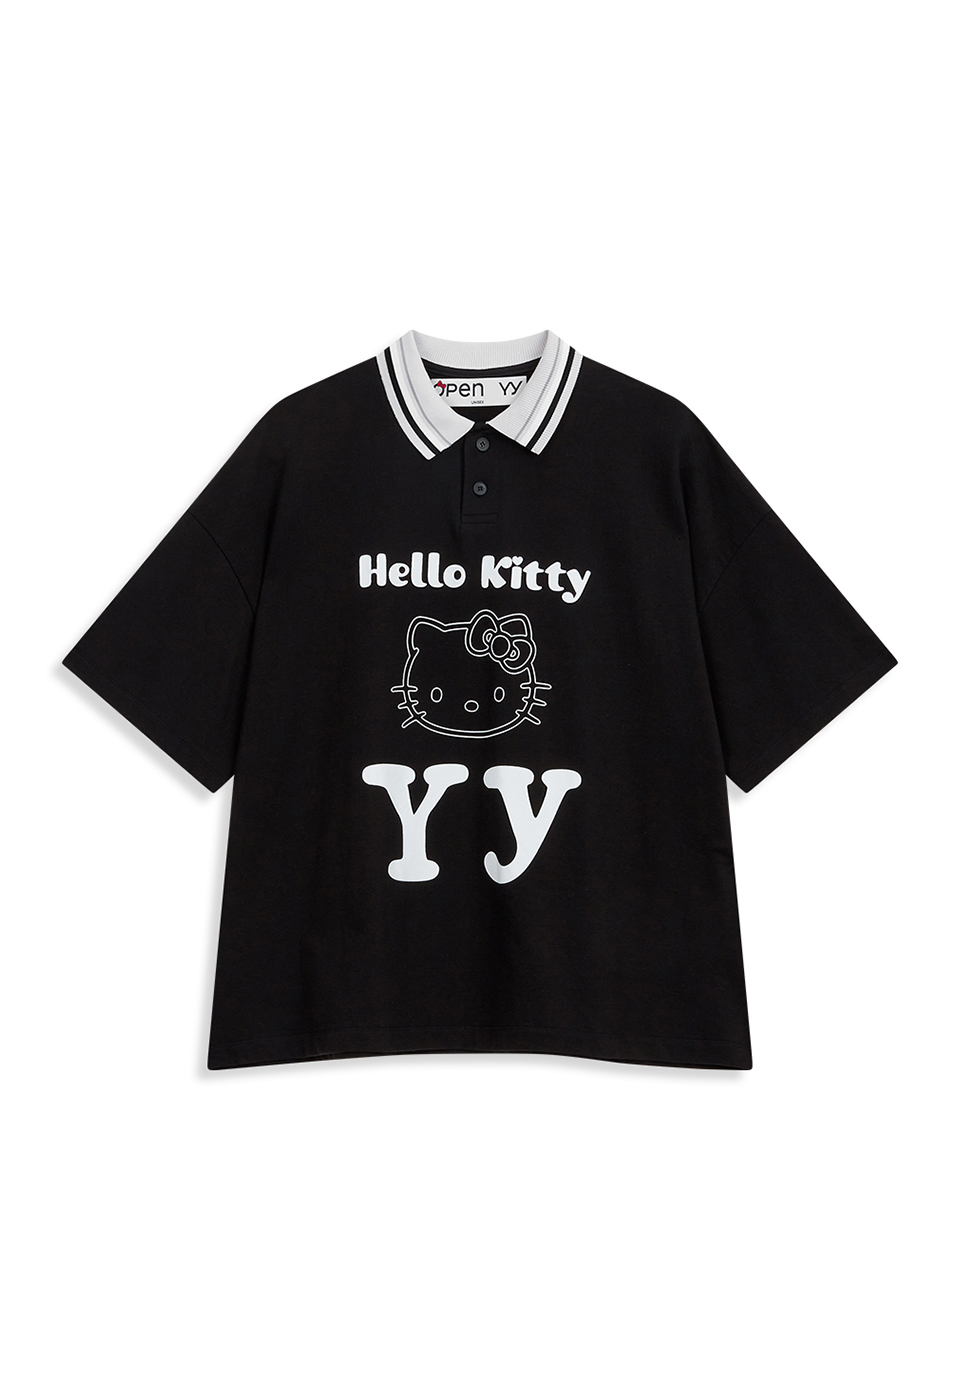 HELLO KITTY X YY COLLARED T-SHIRT, BLACK